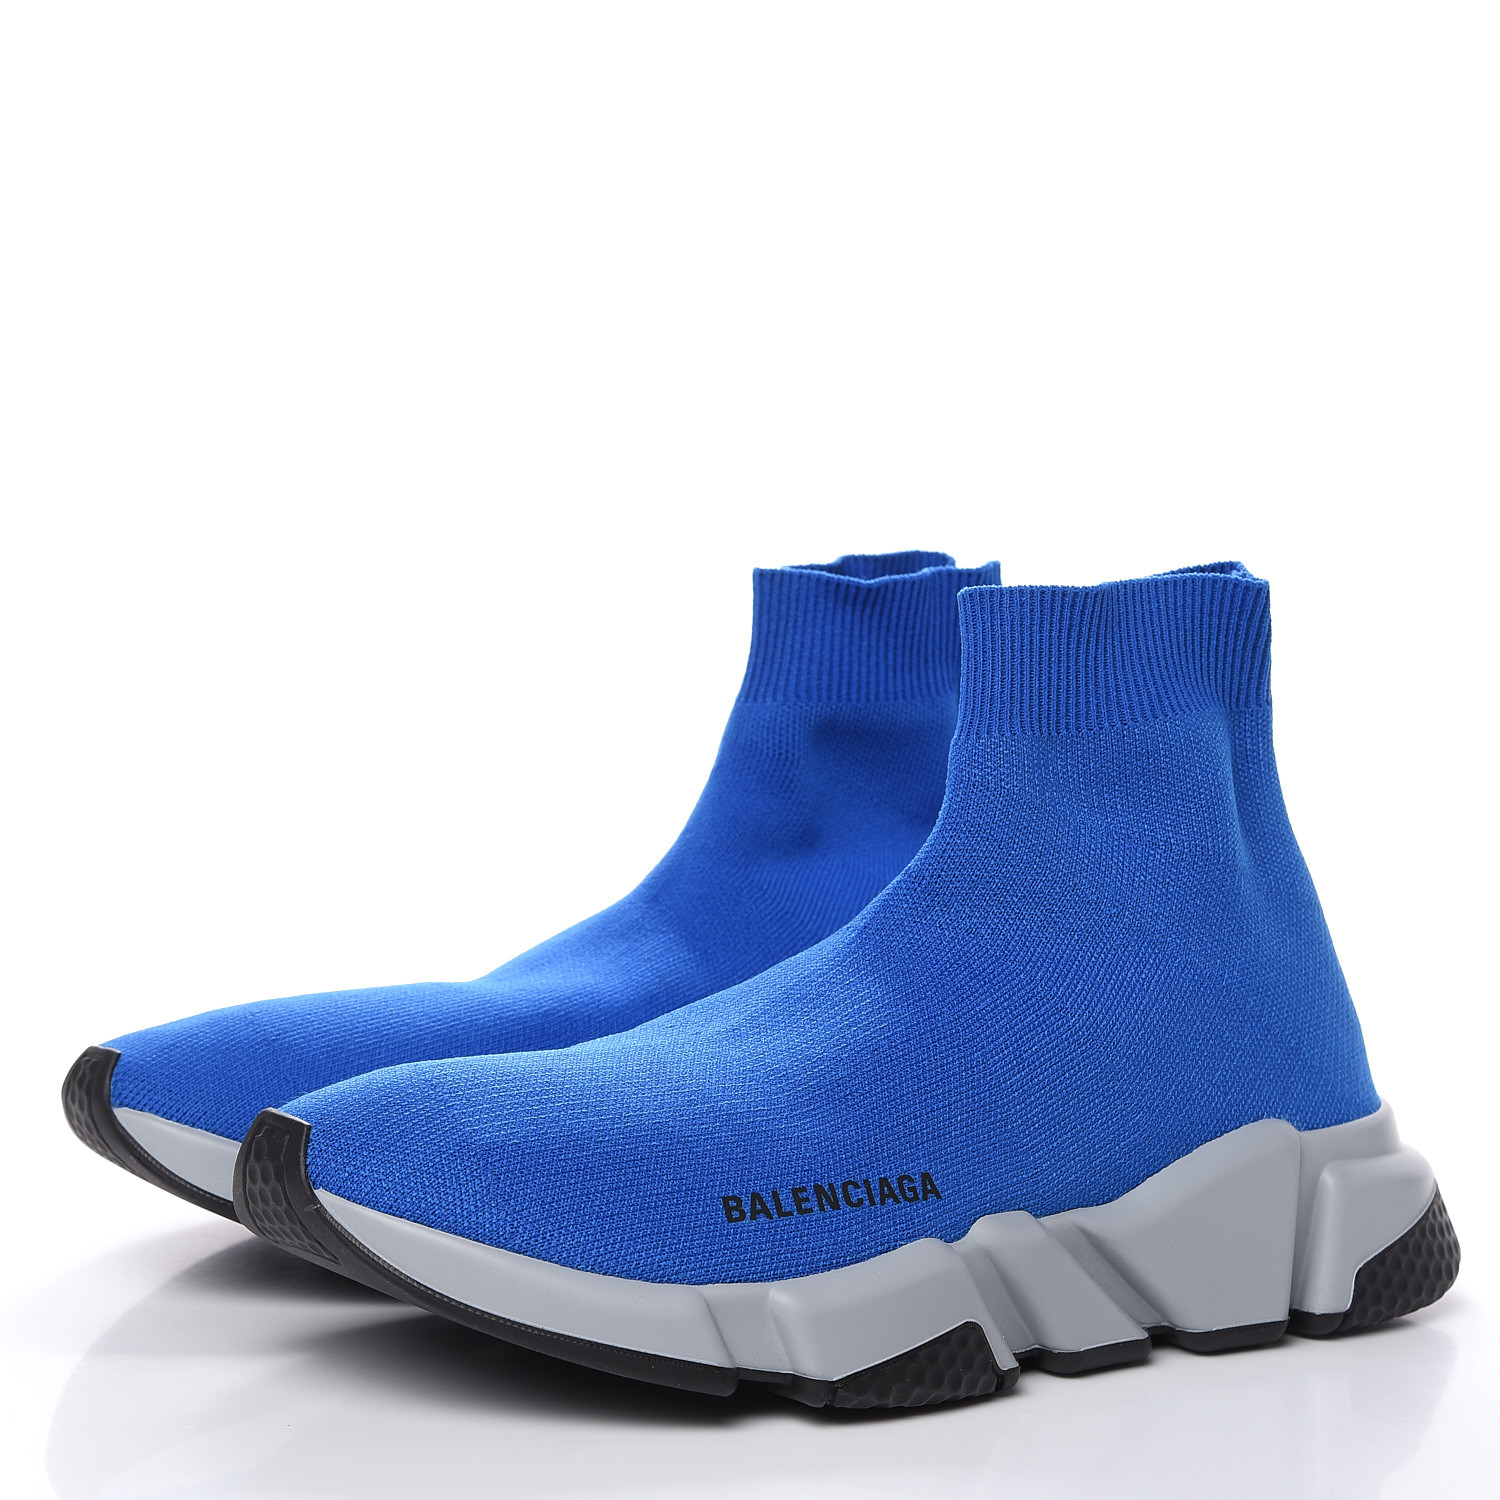 BALENCIAGA Neoprene Knit Speed Trainer Sneakers 7 Blue 484424